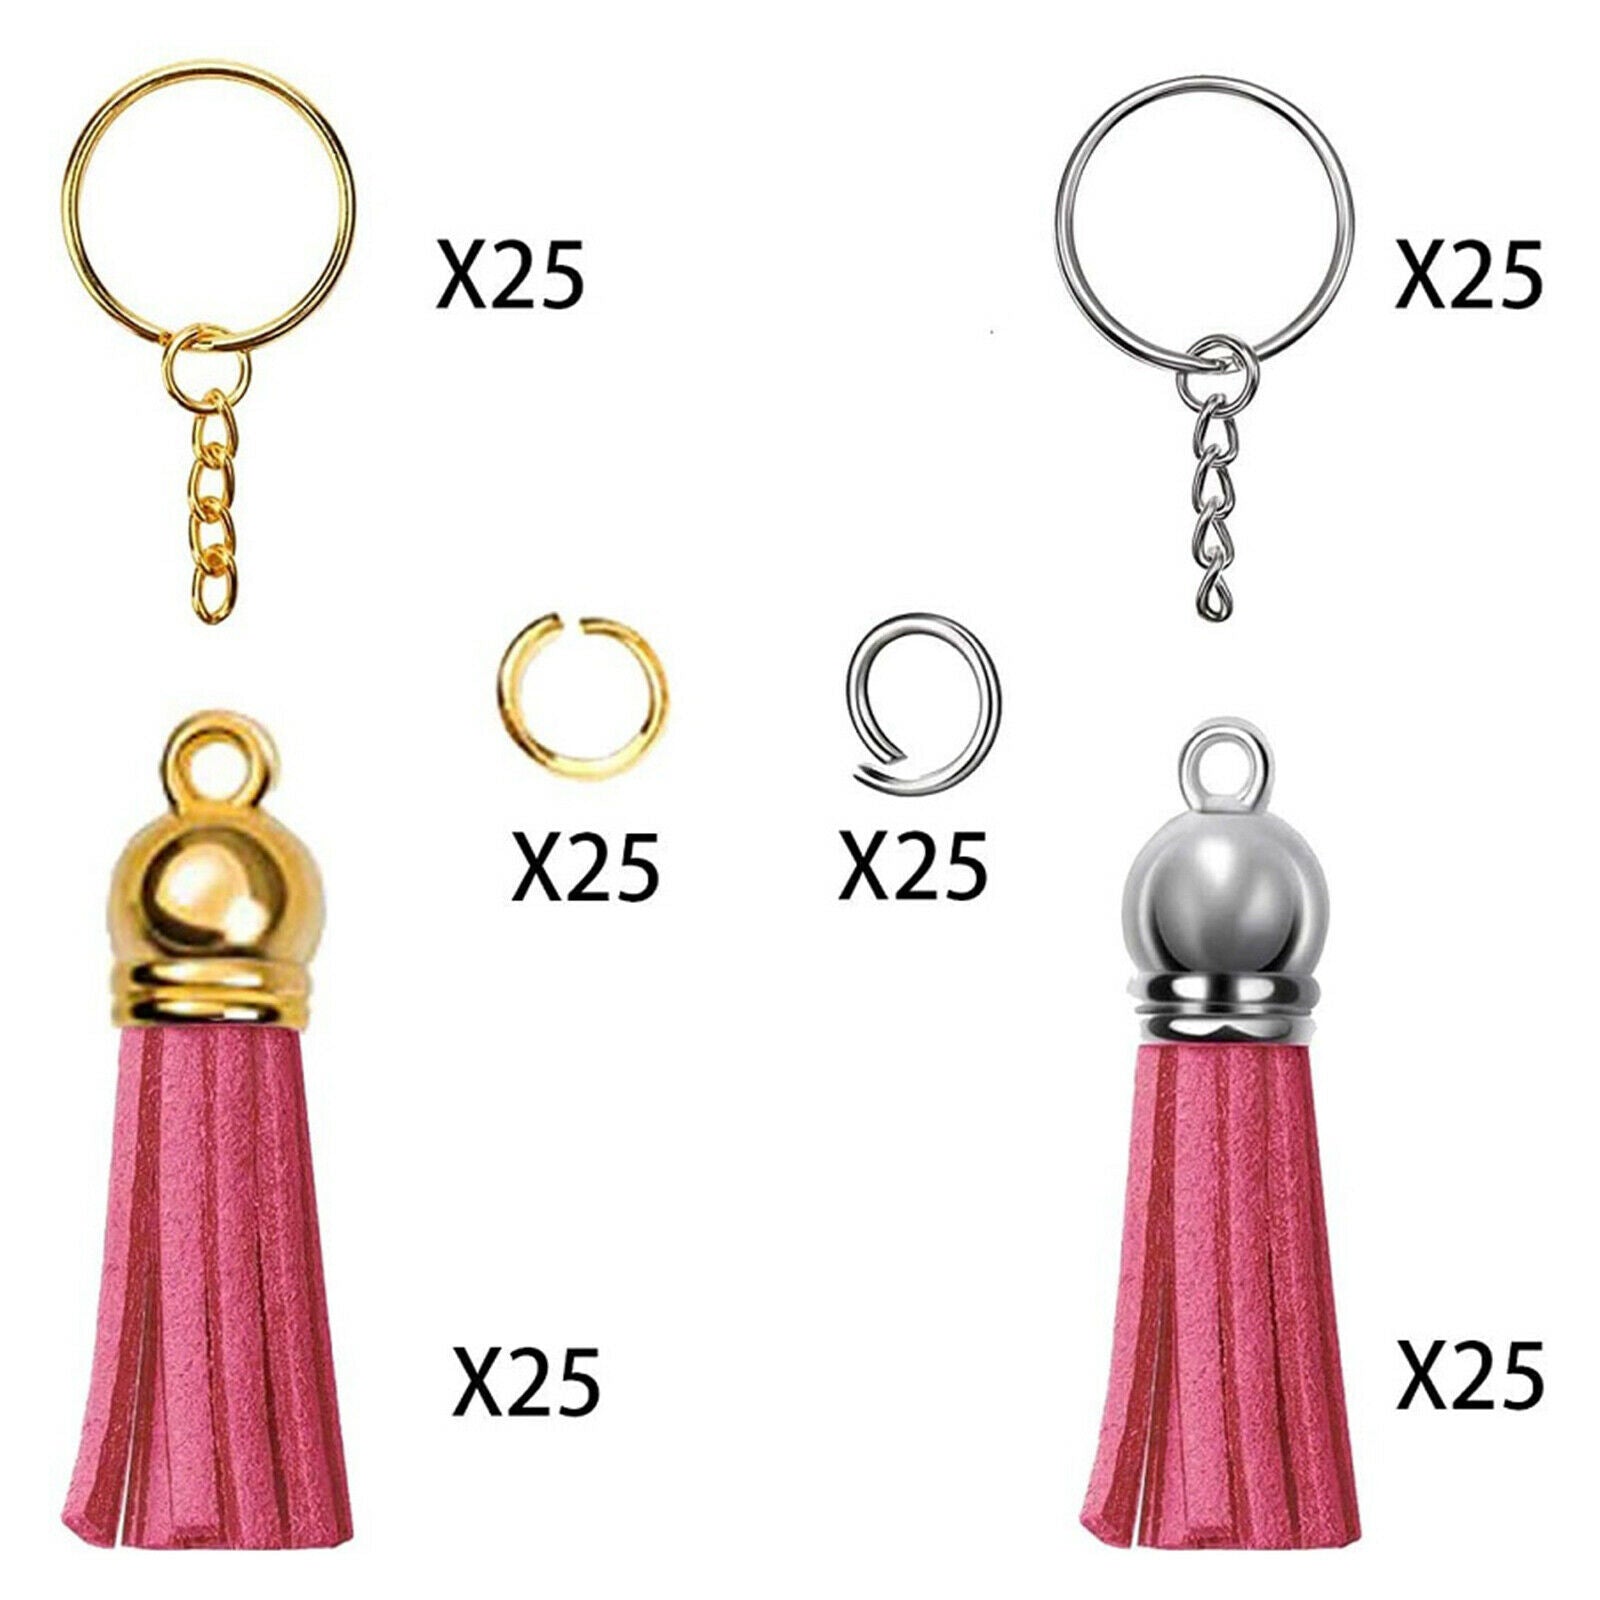 150Pcs Key Chain Ring with Tassel Pendants Bulk for Keychain Jewelry Making